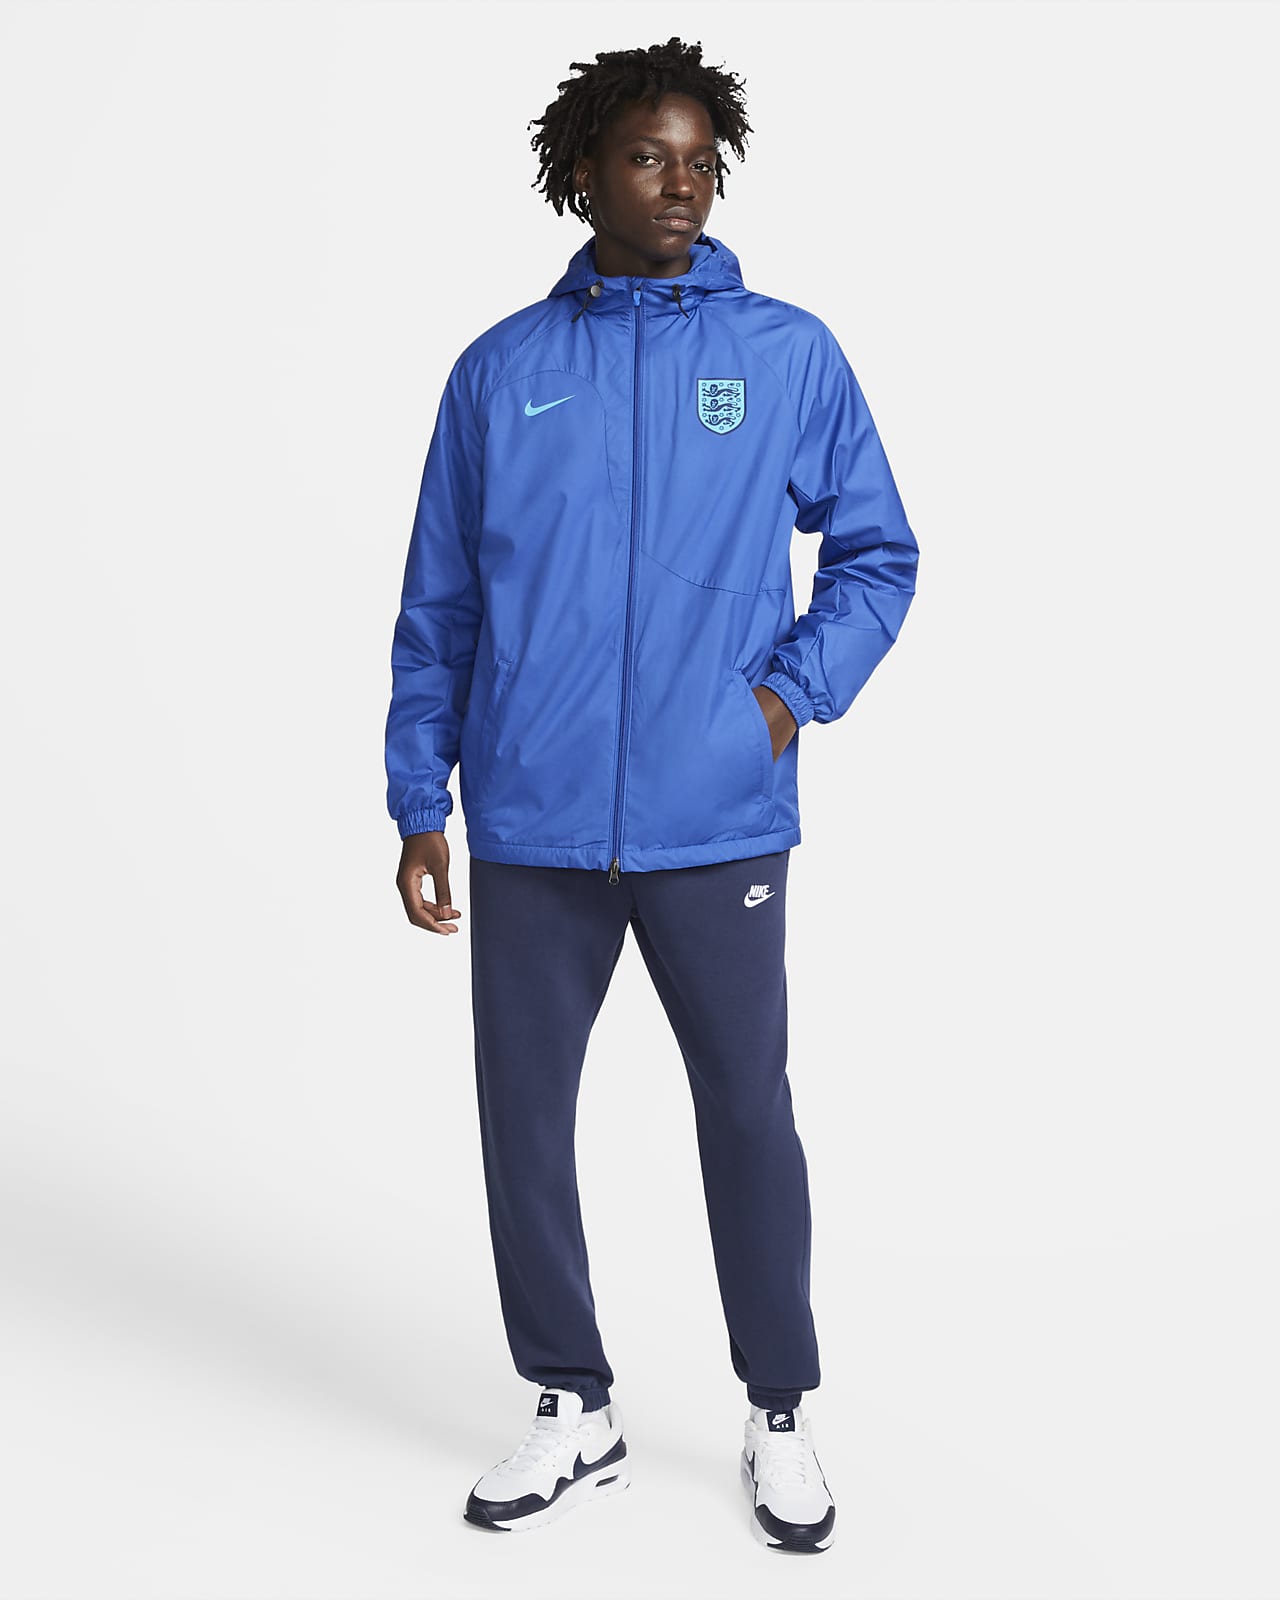 England Strike Men's Nike Dri-FIT Hooded Soccer Jacket